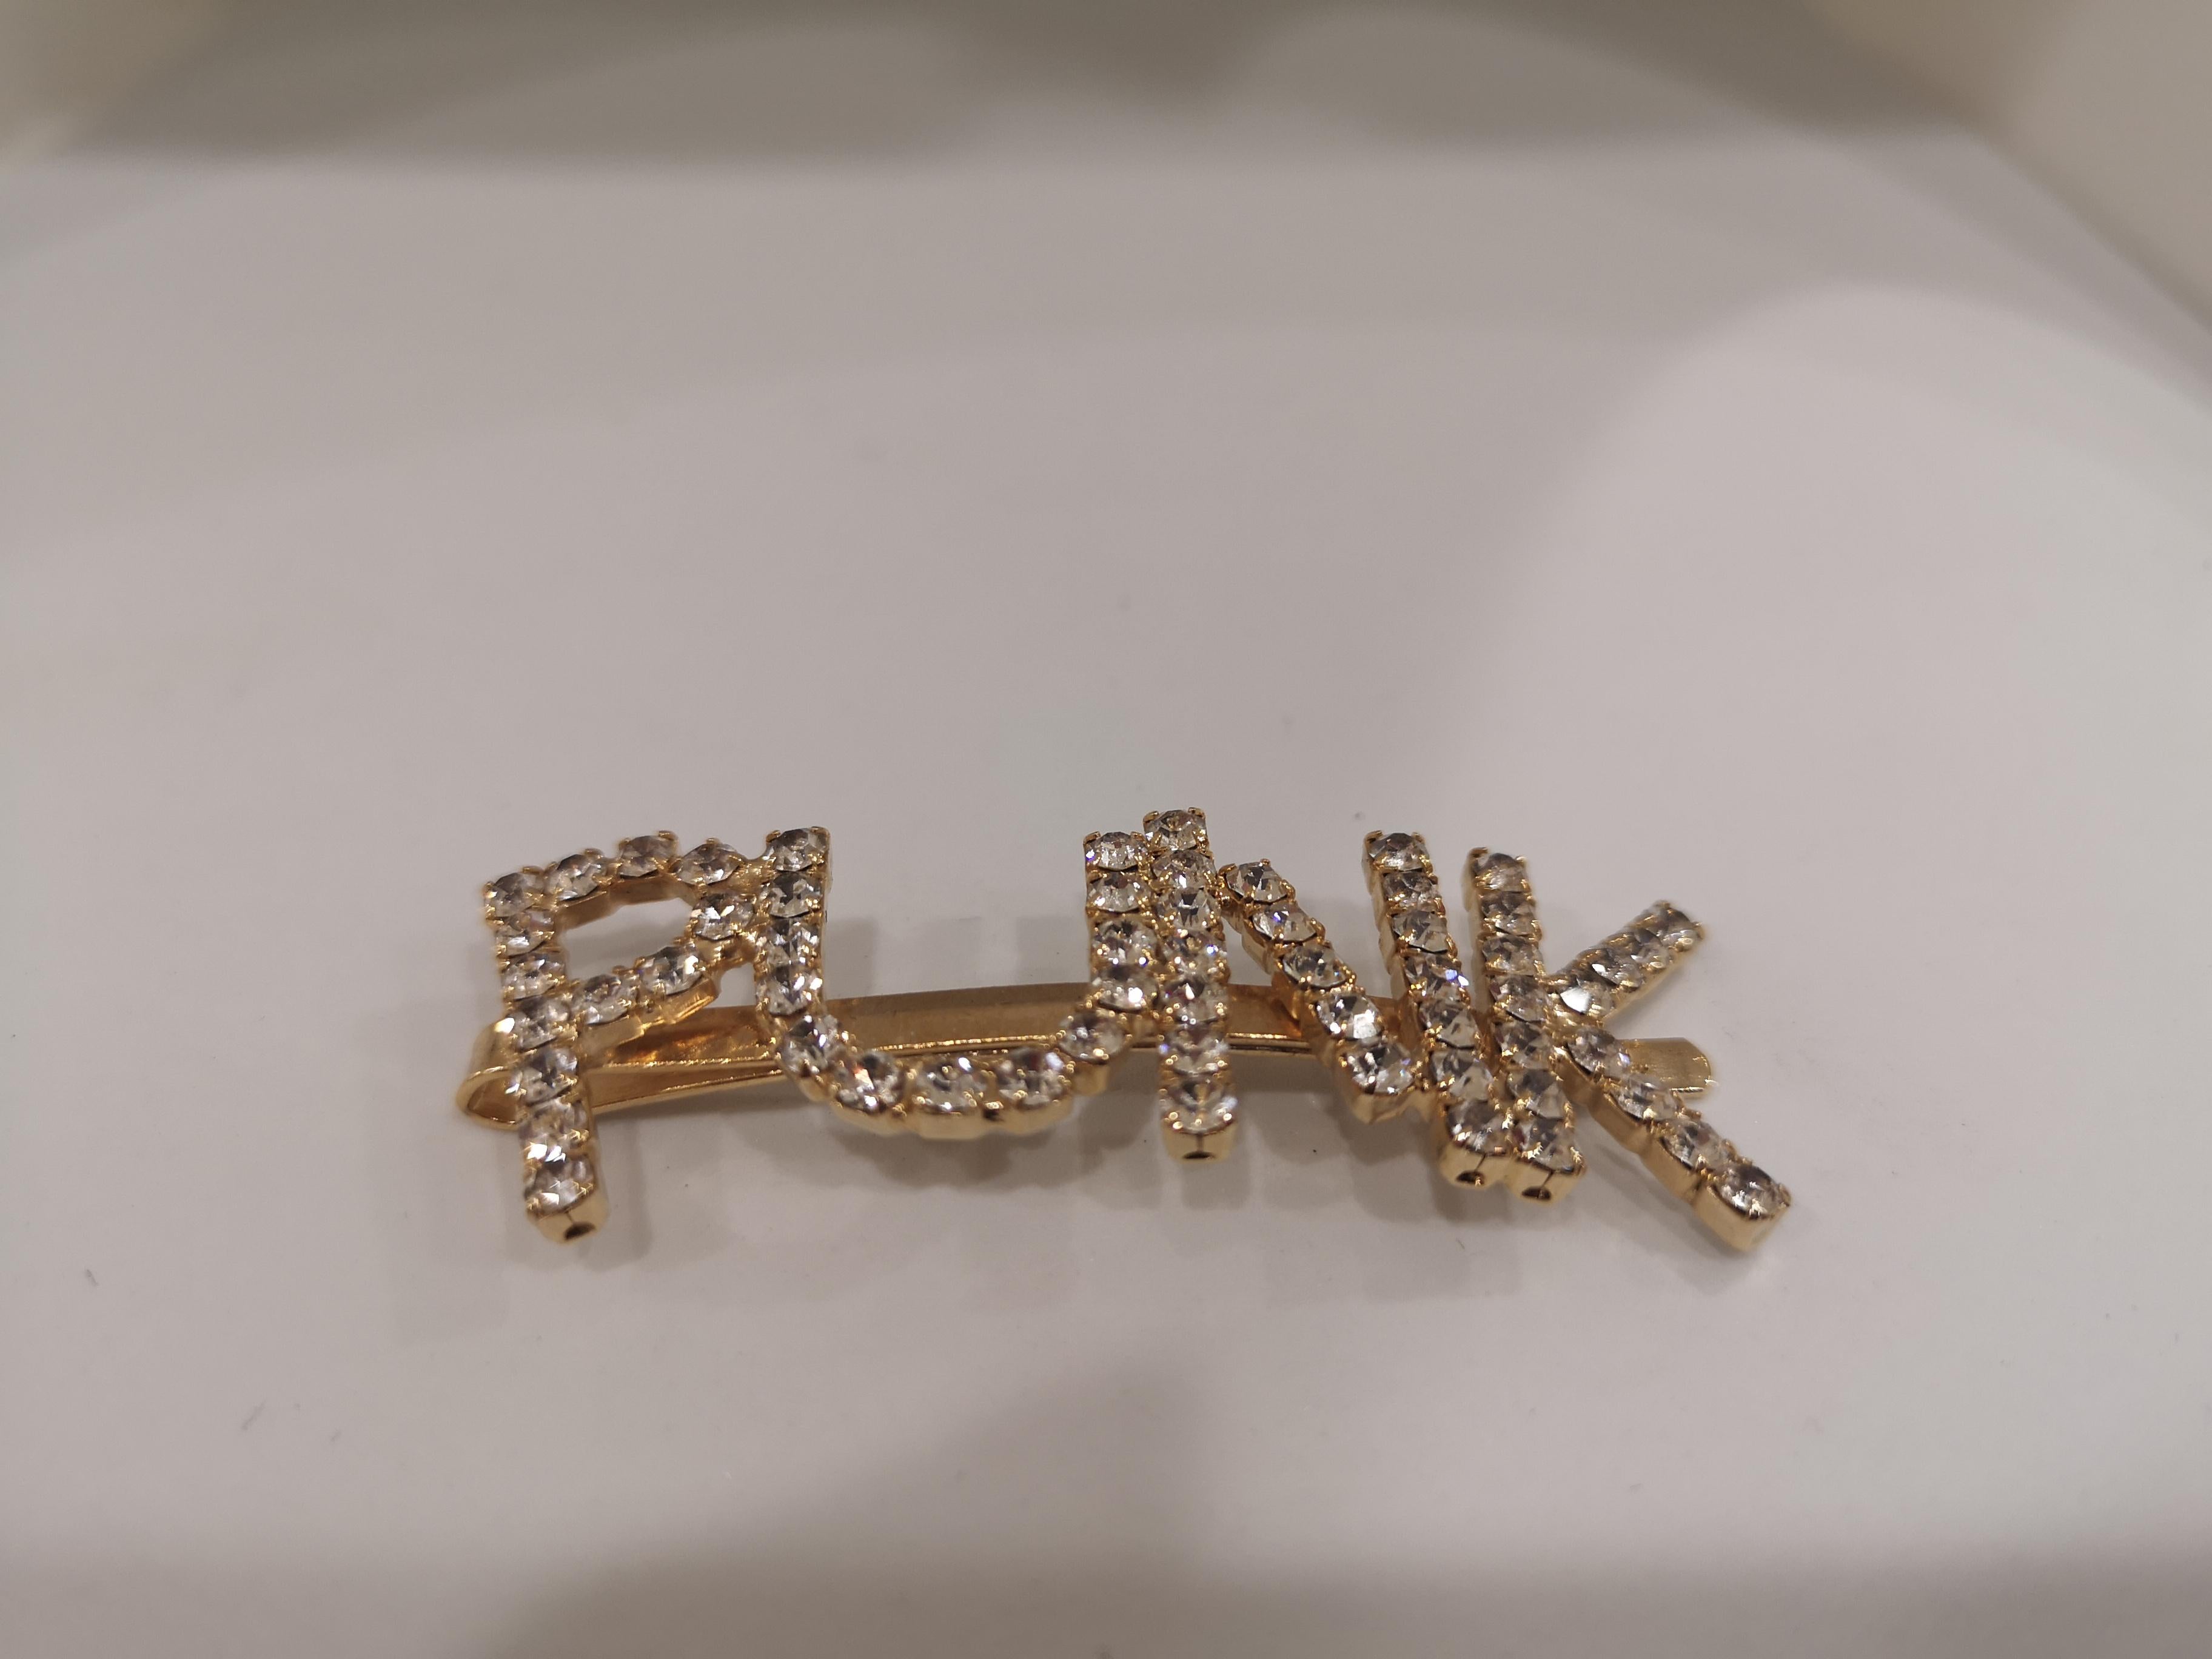 LisaC swarovski stone hair clip
totally handmade in italy with real swarovski stones
measurements: 6.5 cm